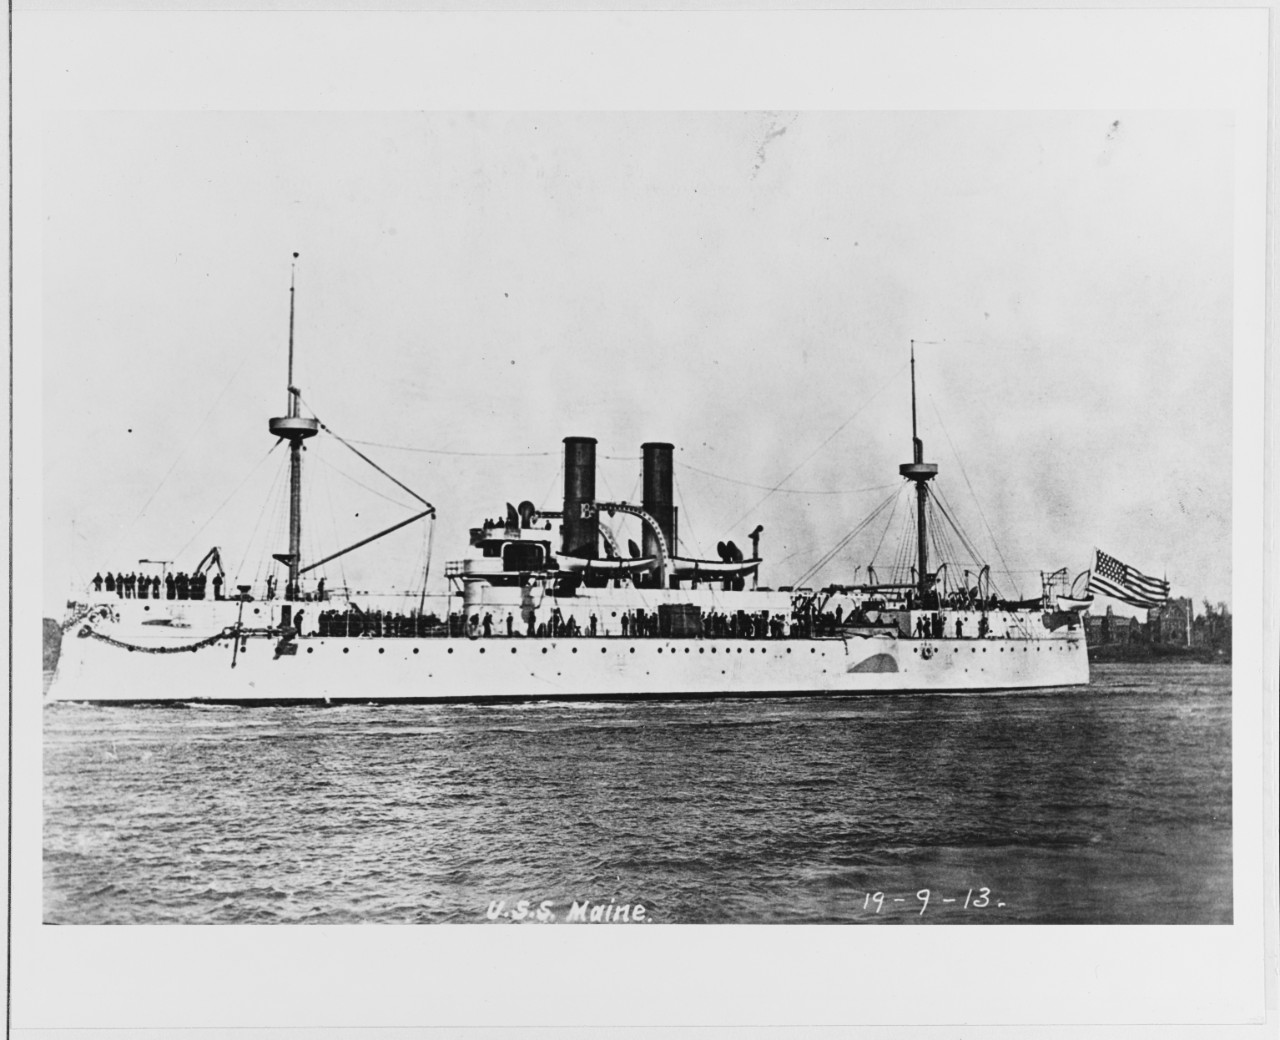 USS Maine (1895-1898